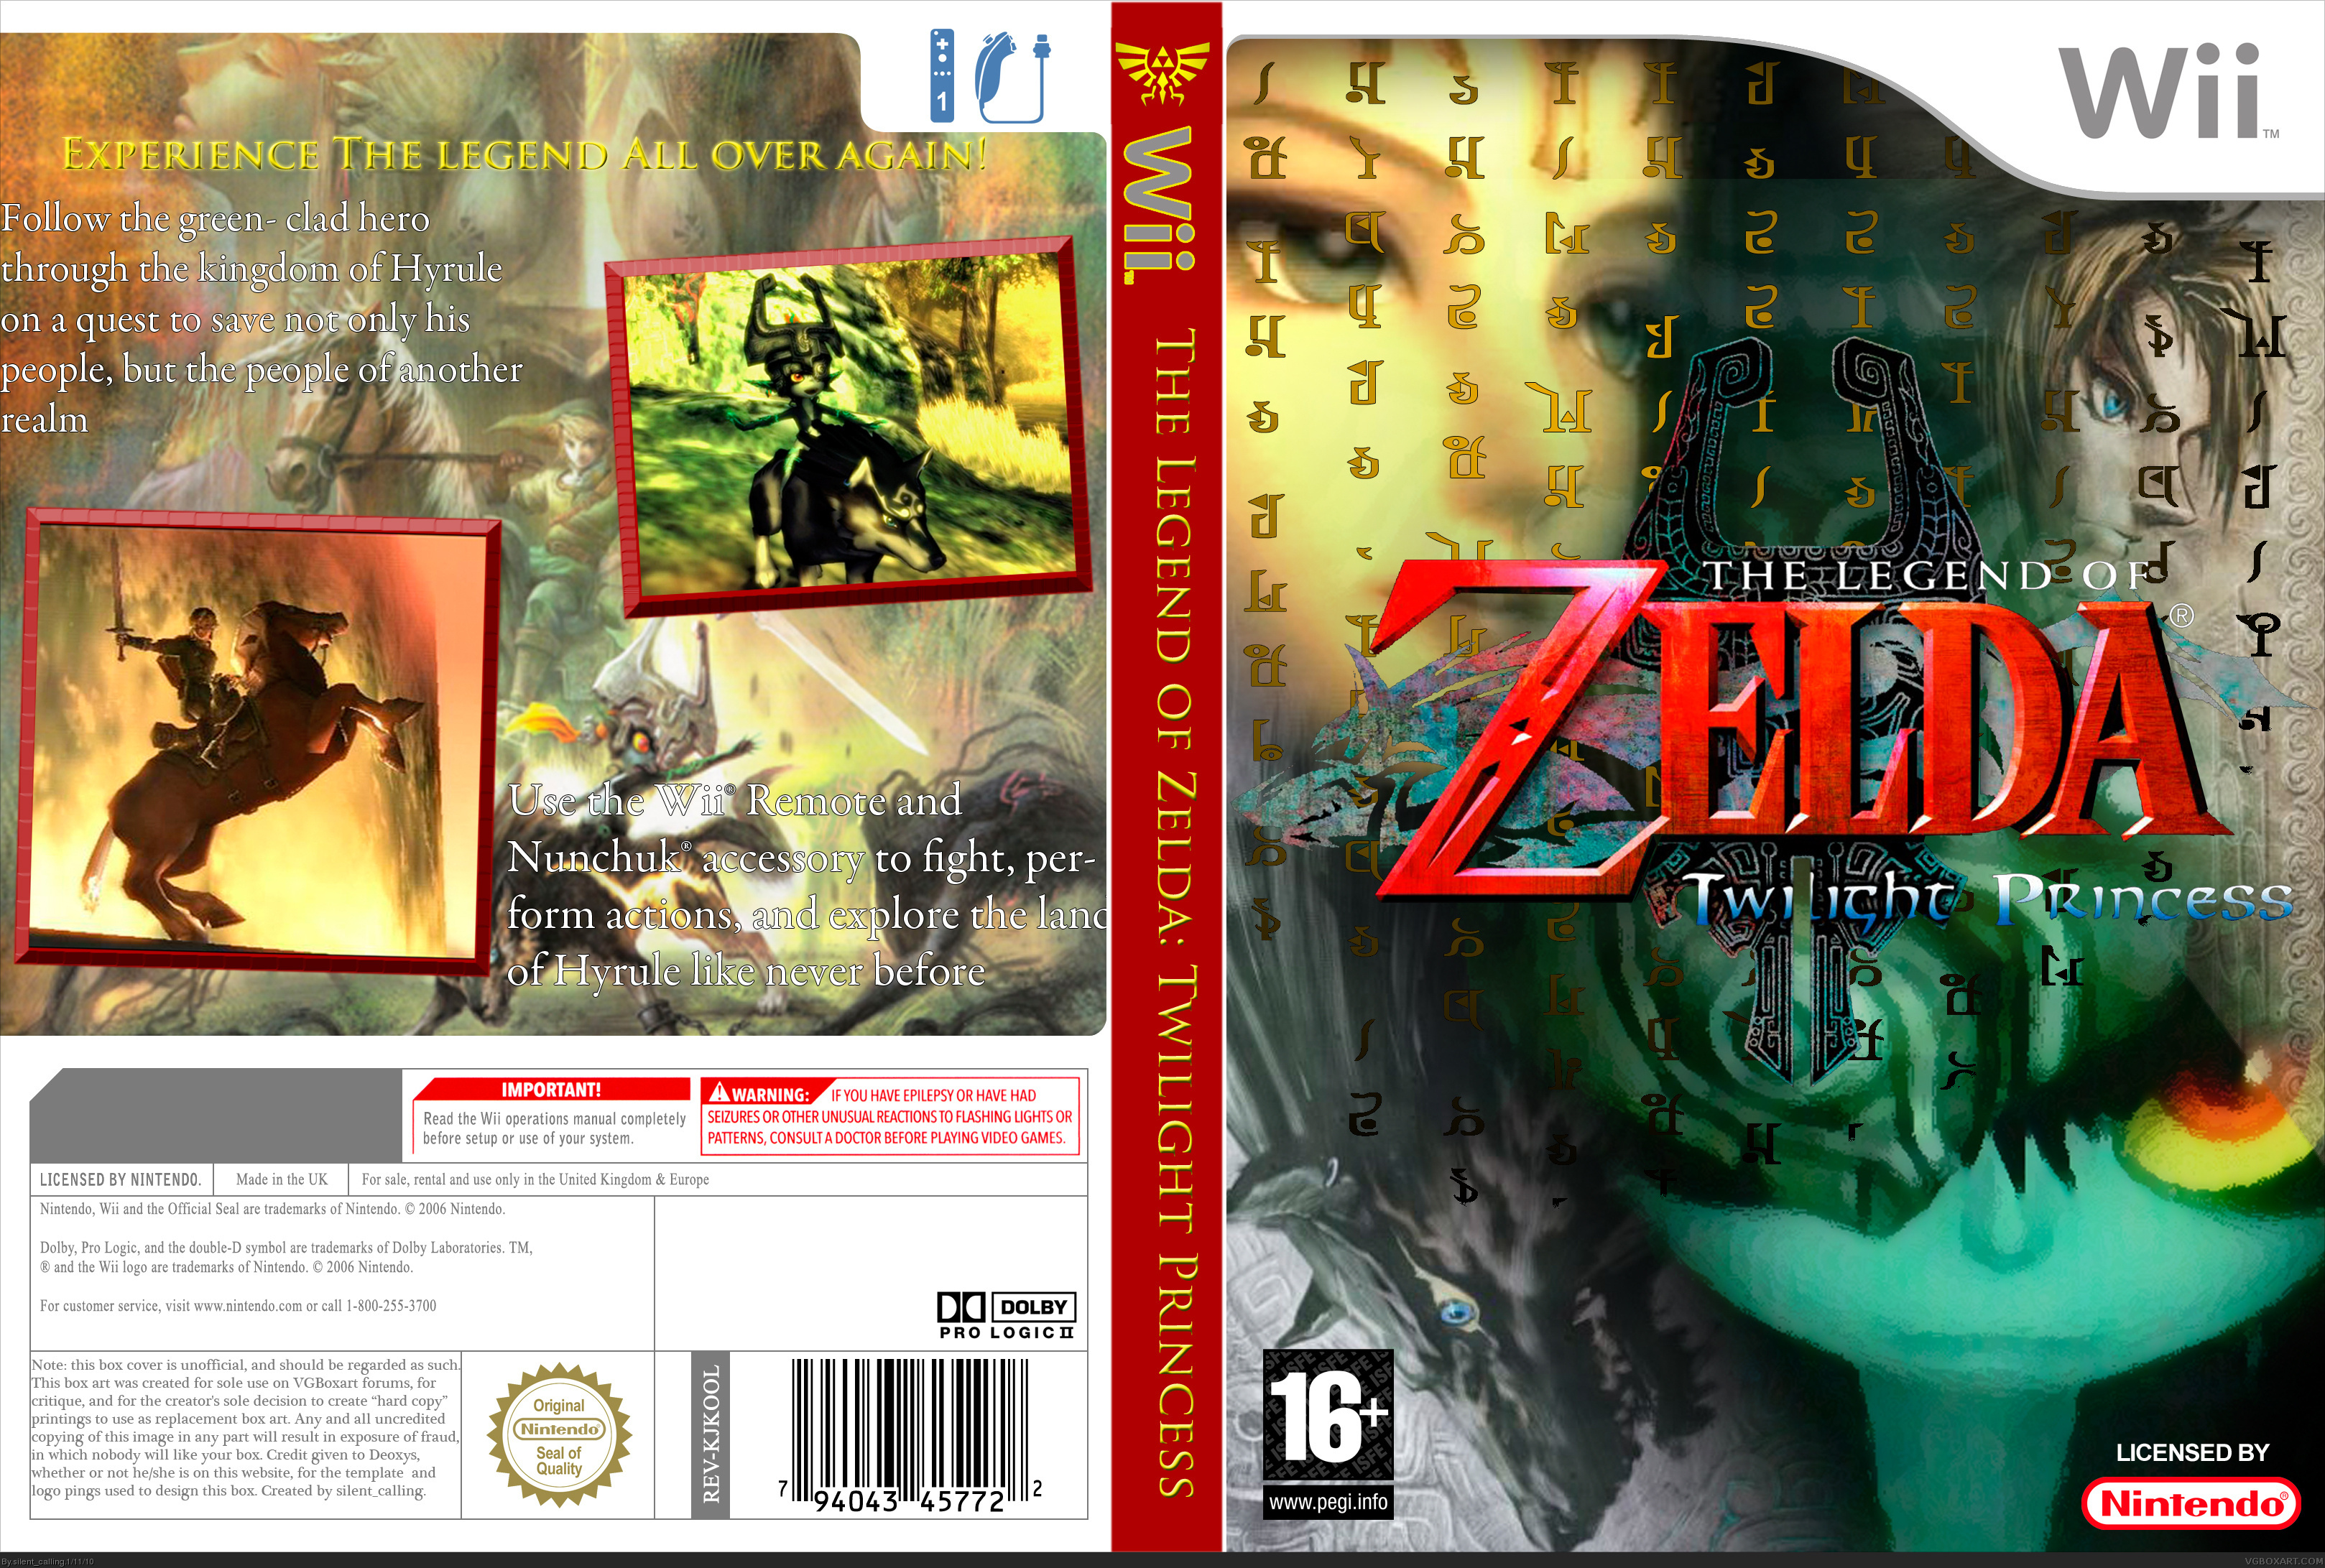 The Legend of Zelda Twilight Princess. 